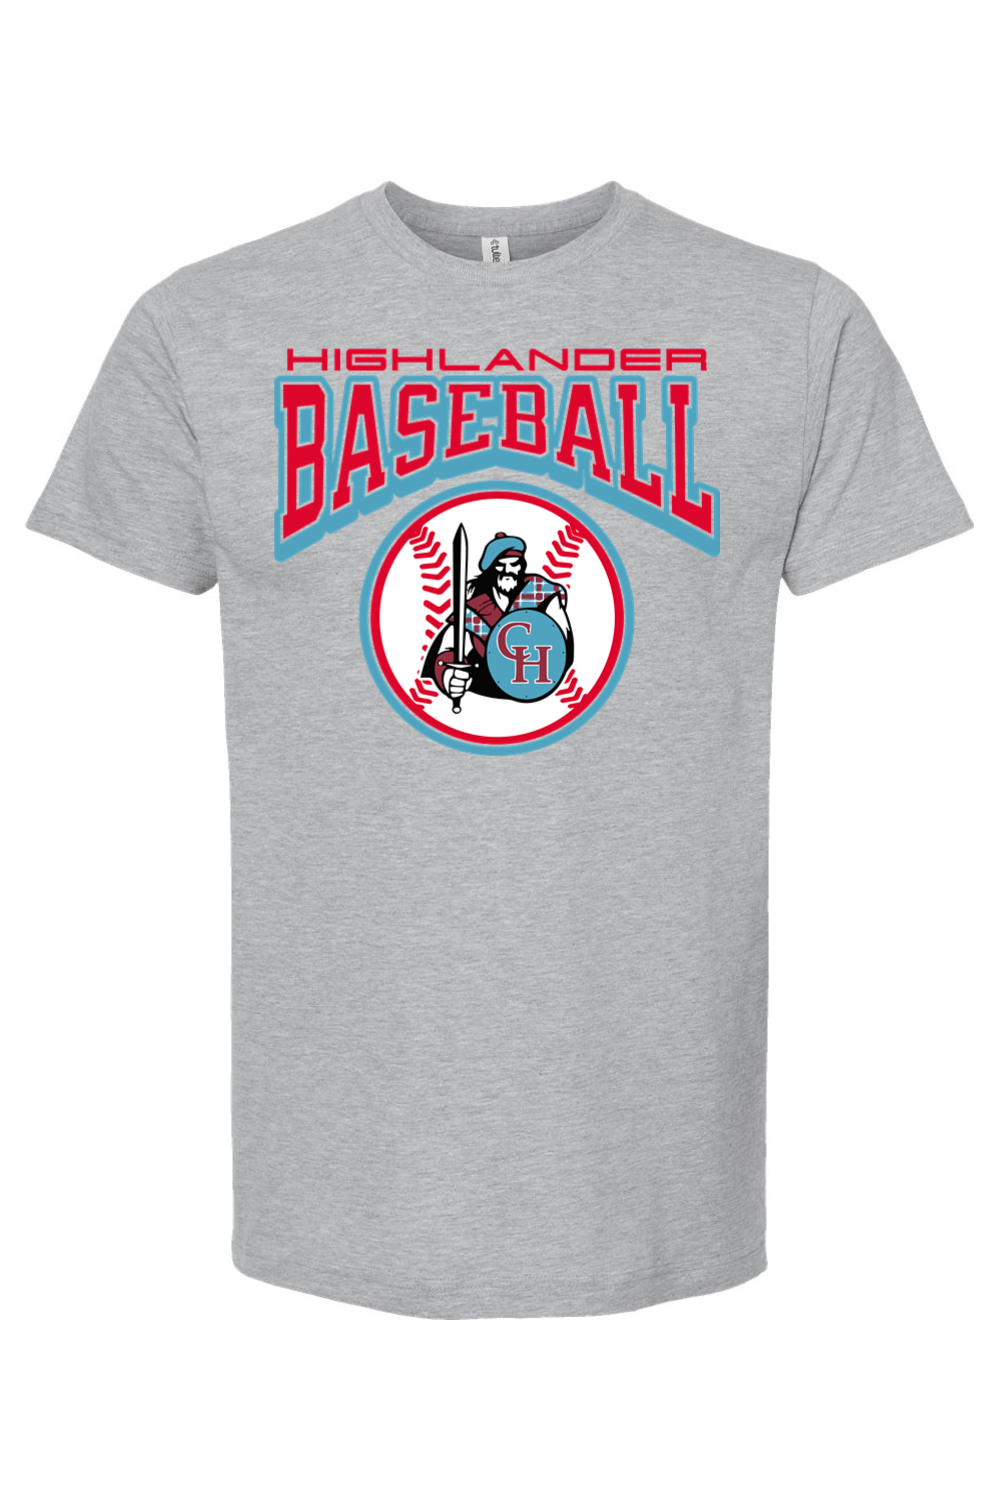 Highlander Baseball - Impact T-Shirt - Yinzylvania